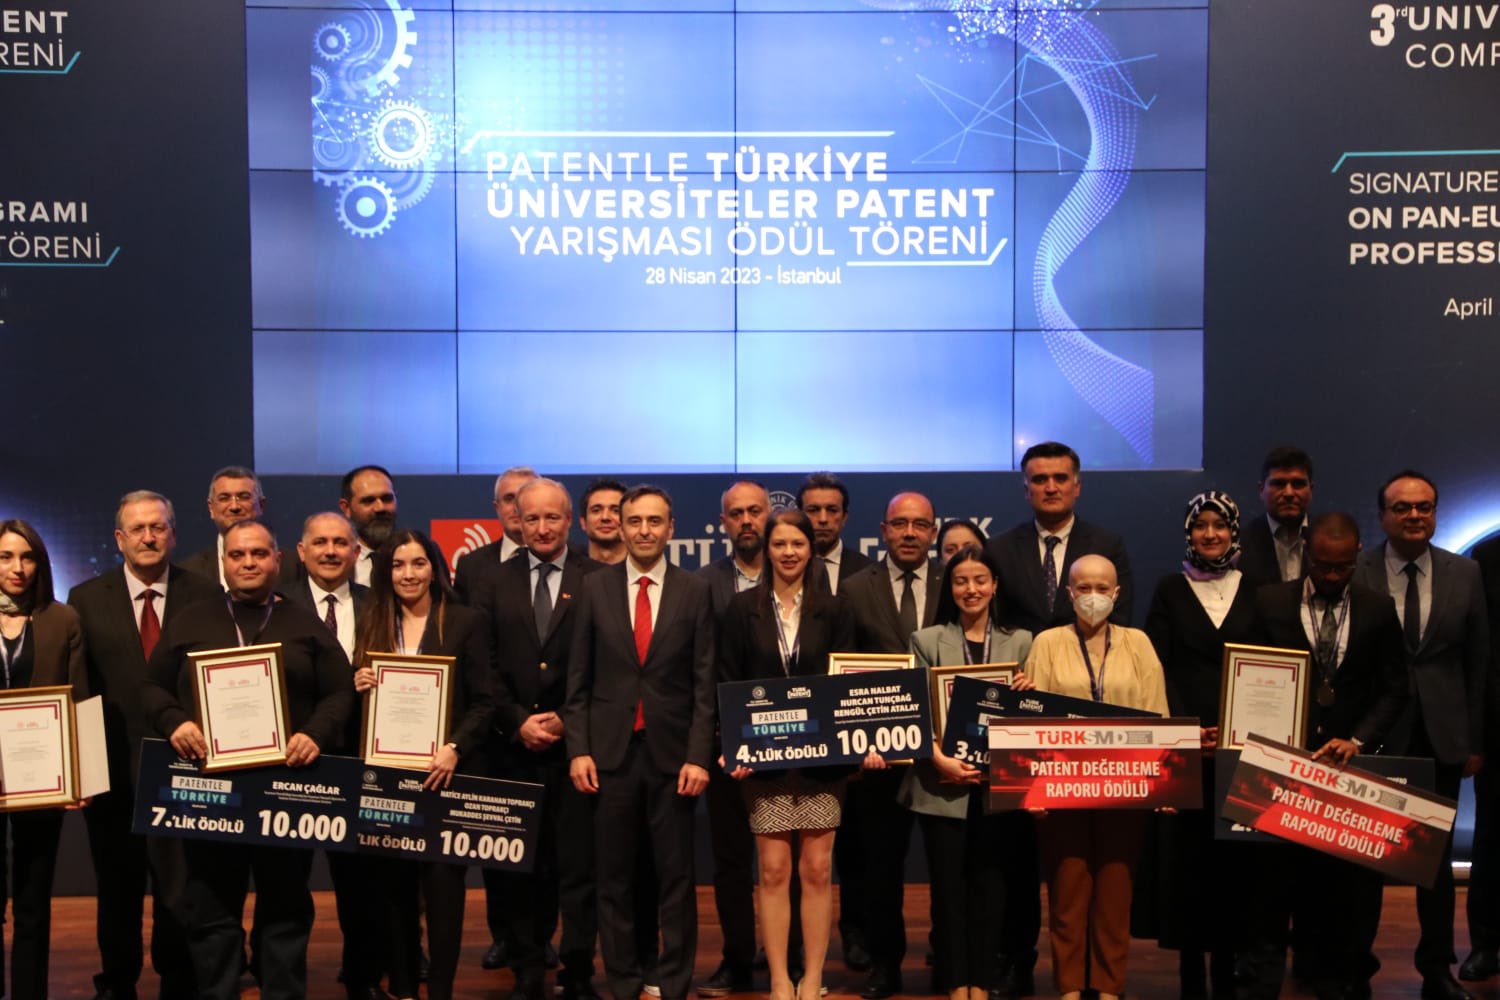 "Patentle Türkiye" 3rd Universities Patent Competition Award Ceremony